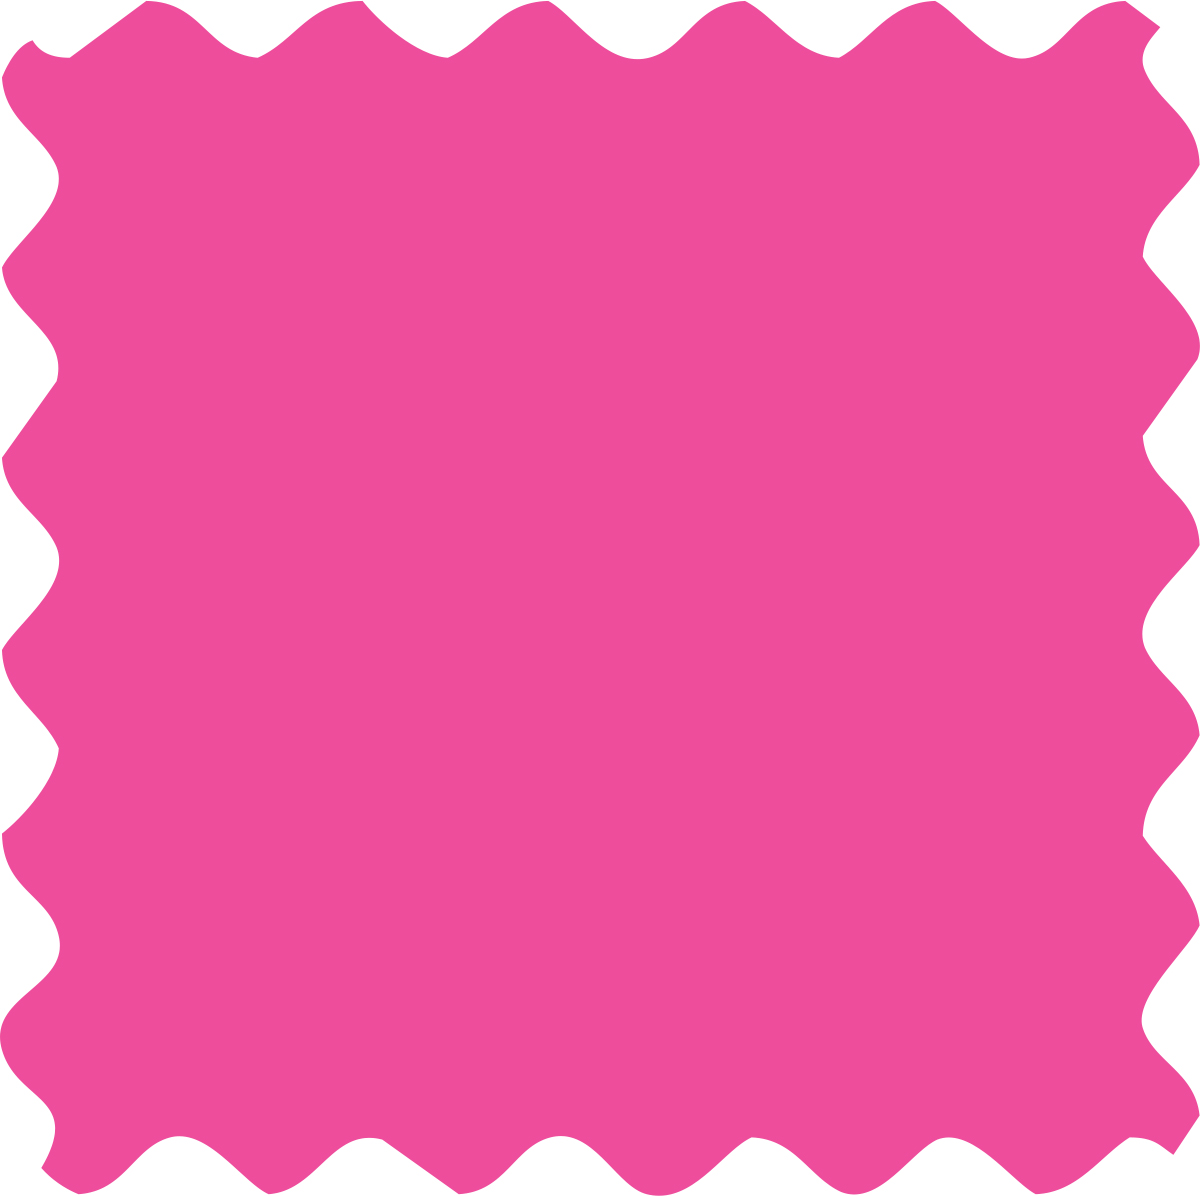 Shop Plaid Fabric Creations™ Neon Black Light Fabric Paint - Pink